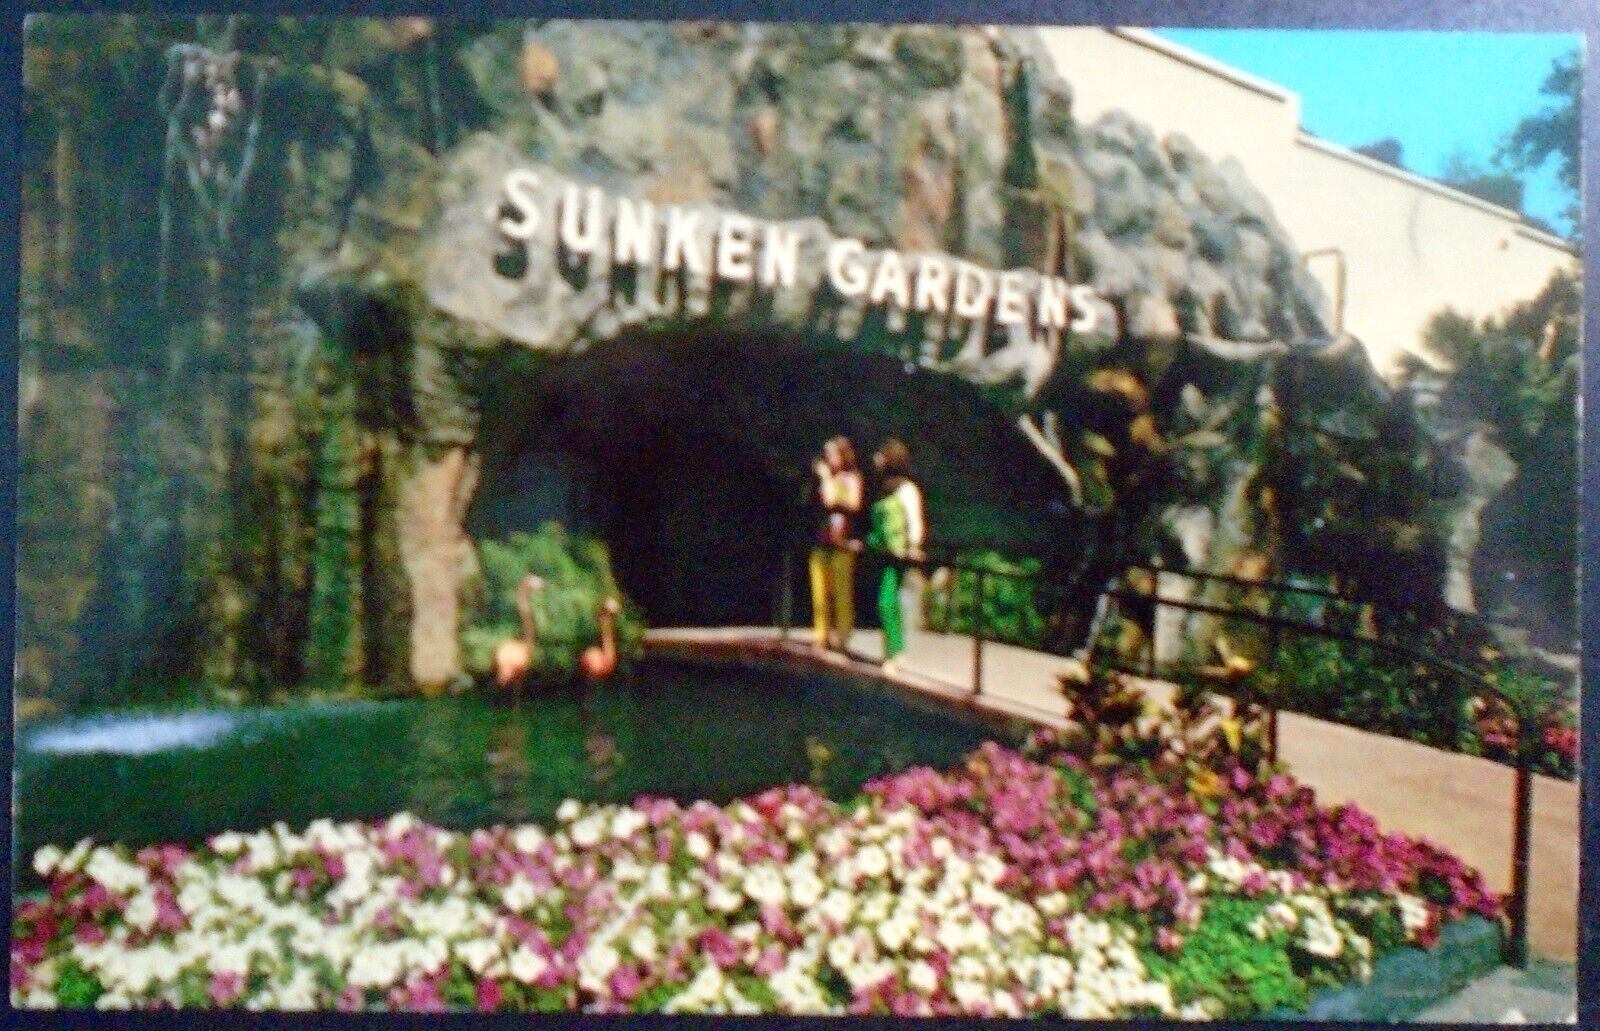 1969 Beautiful Sunken Gardens, Aviary Entrance, St. Petersburg, Florida